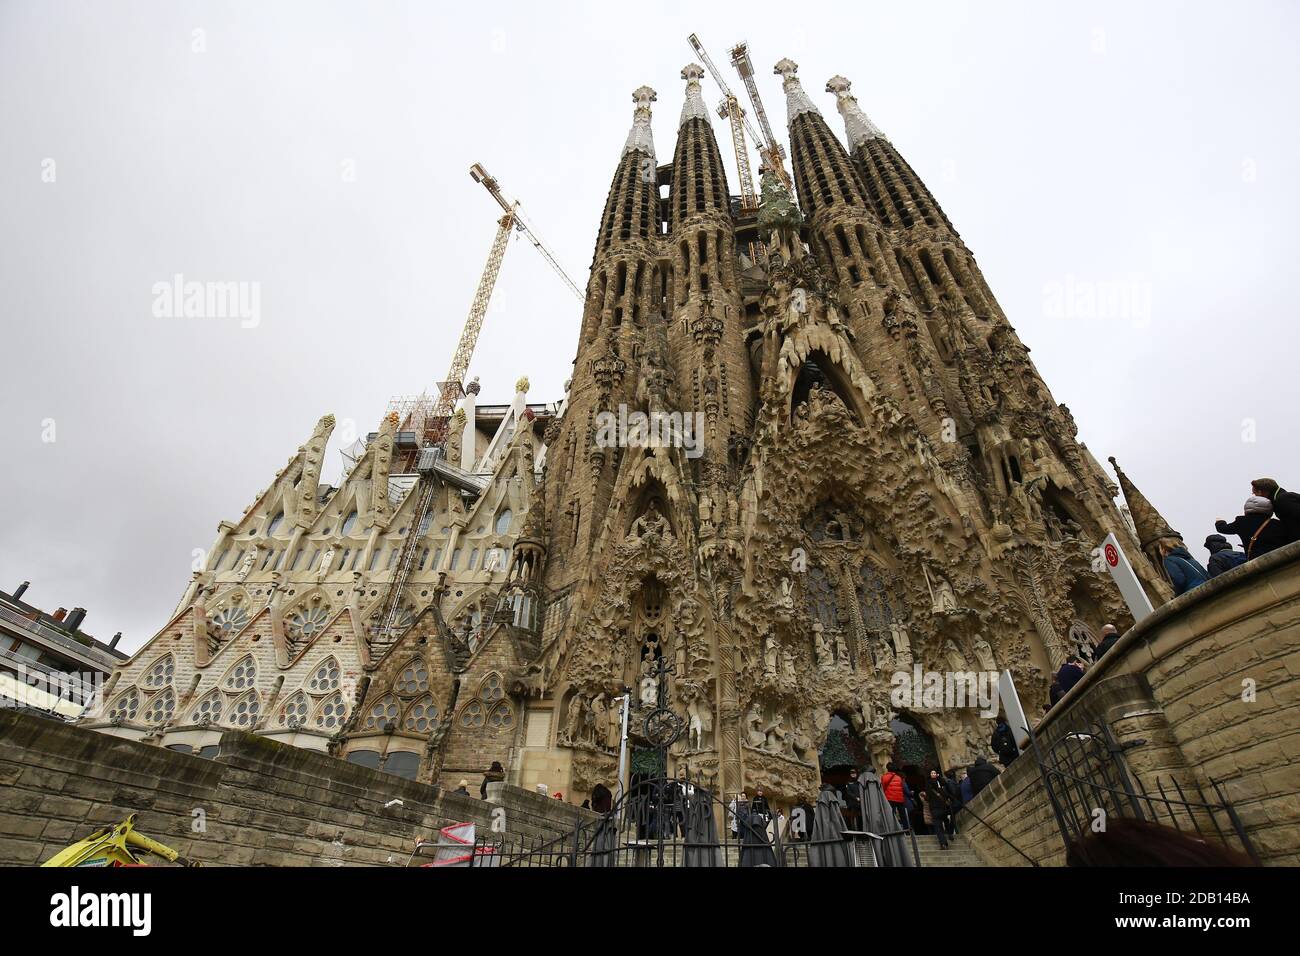 BARCELON, SPAIN - Feb 13, 2017: The Sagrada Familia - Holy Family - has ...